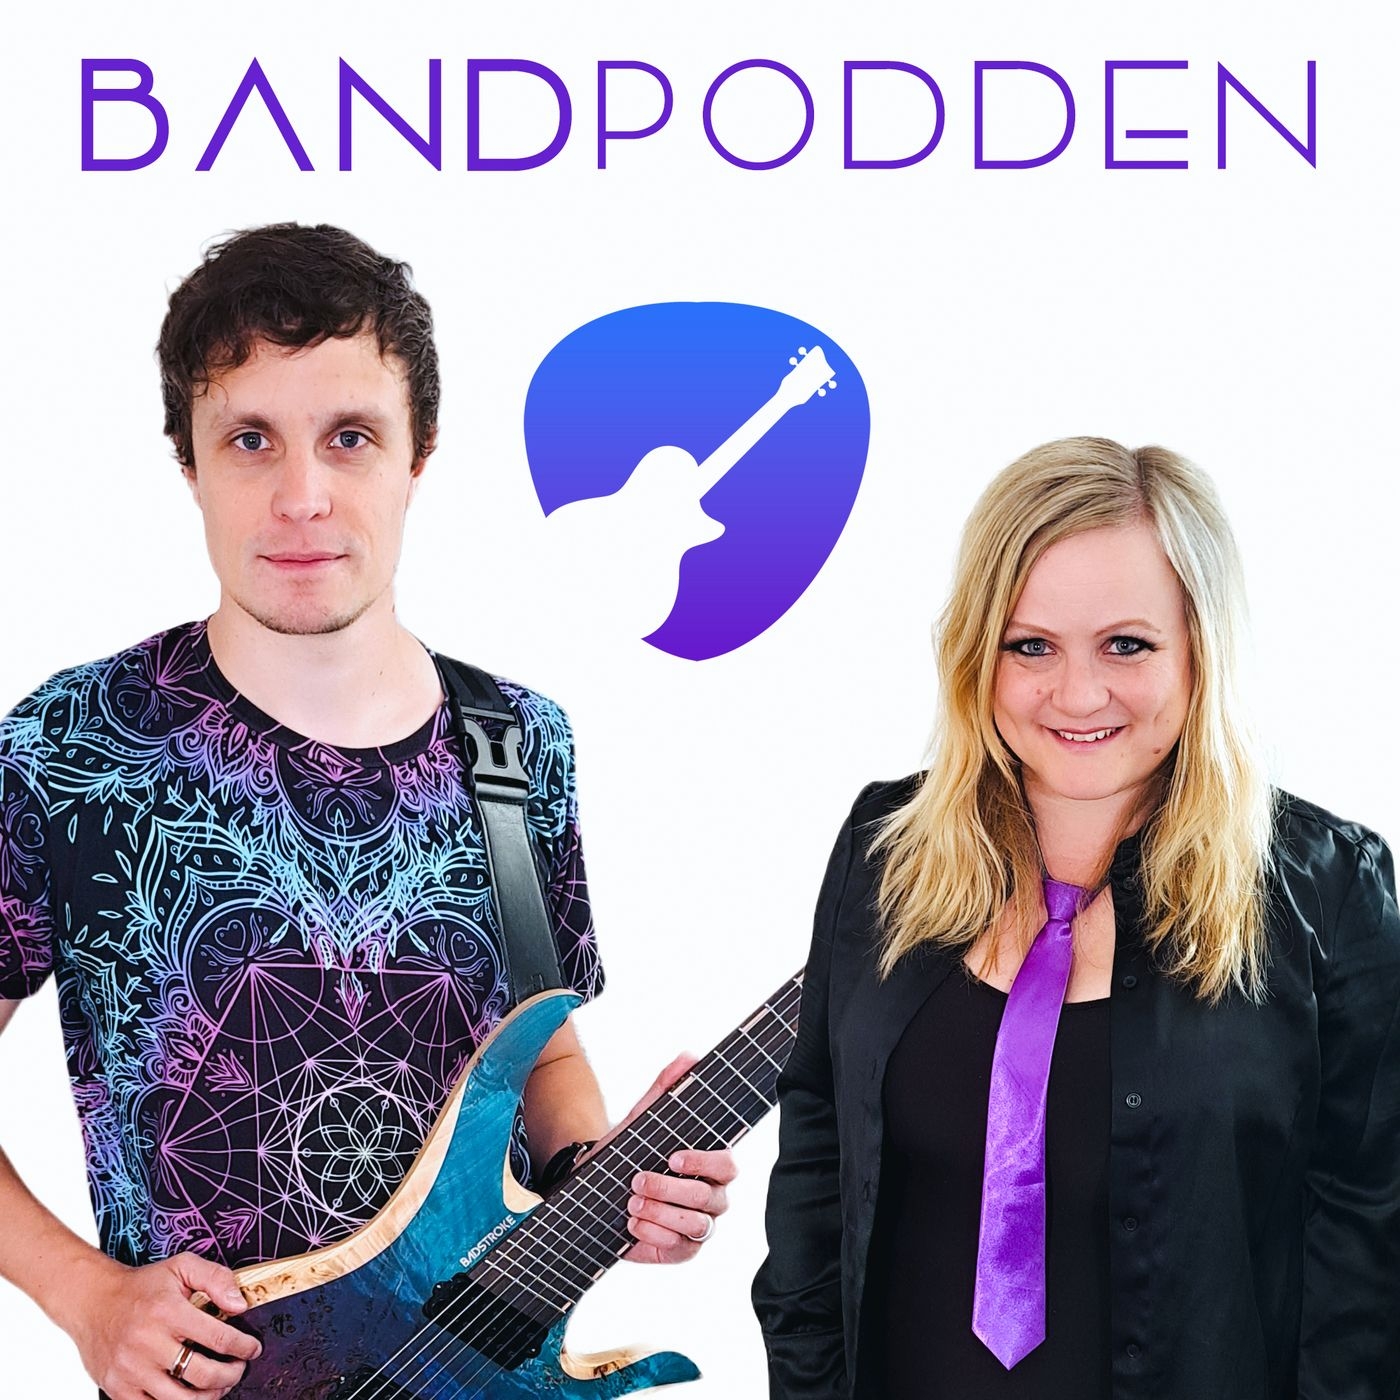 Bandpodden